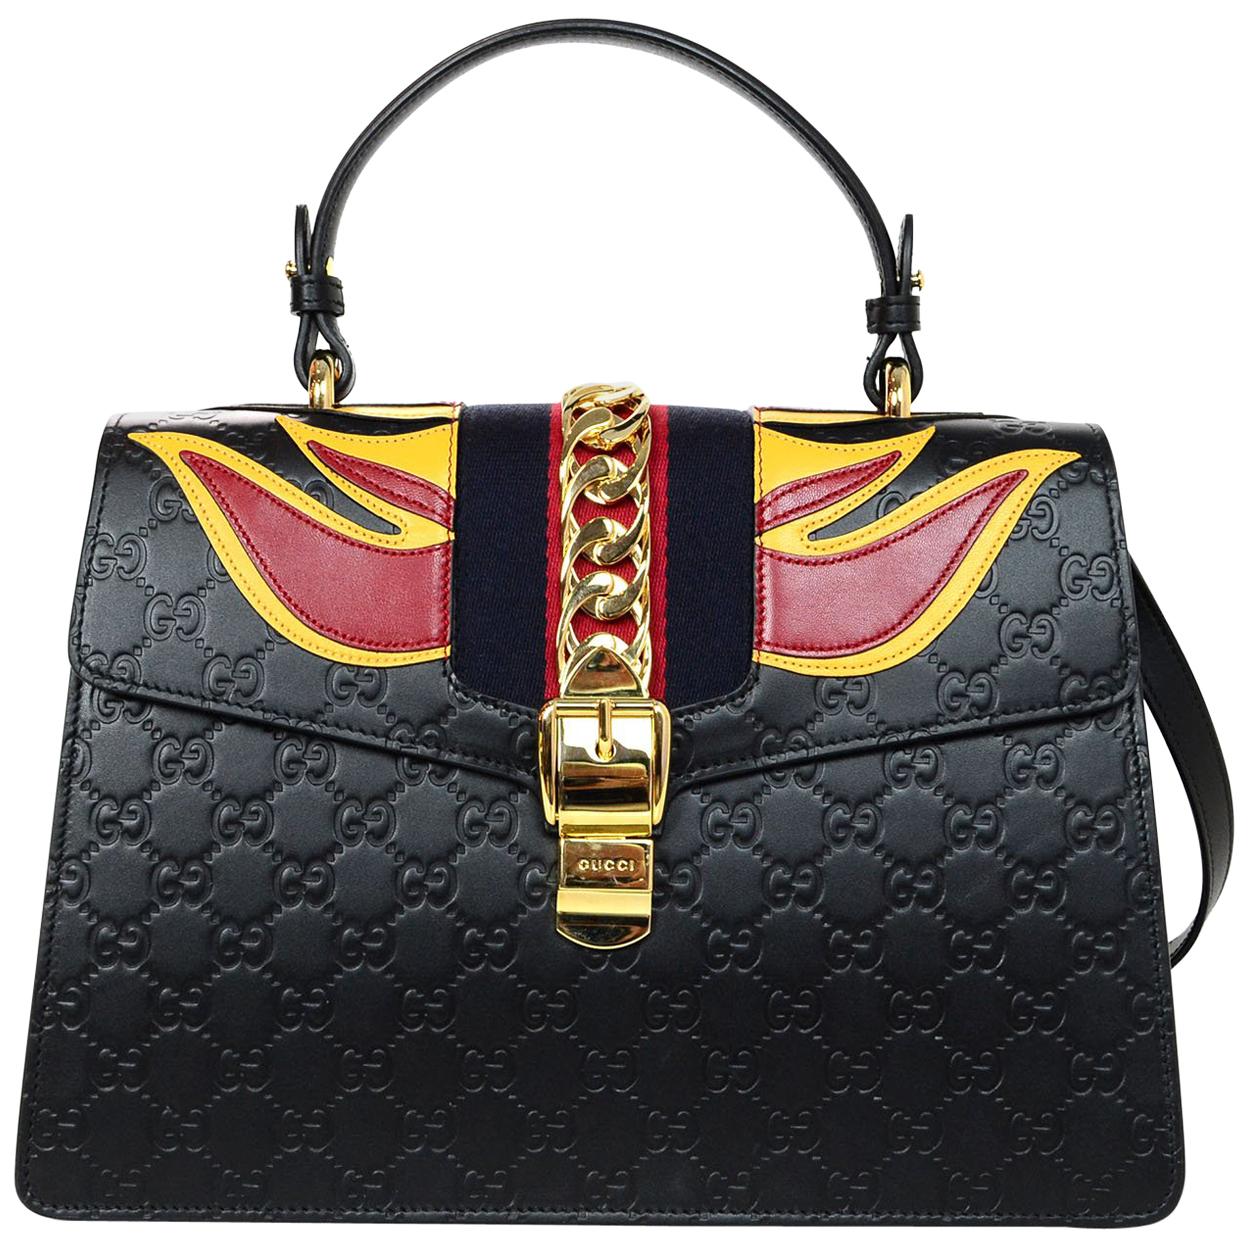 Gucci Black Leather Monogram Guccissima Medium Sylvie Flame Bag at ...